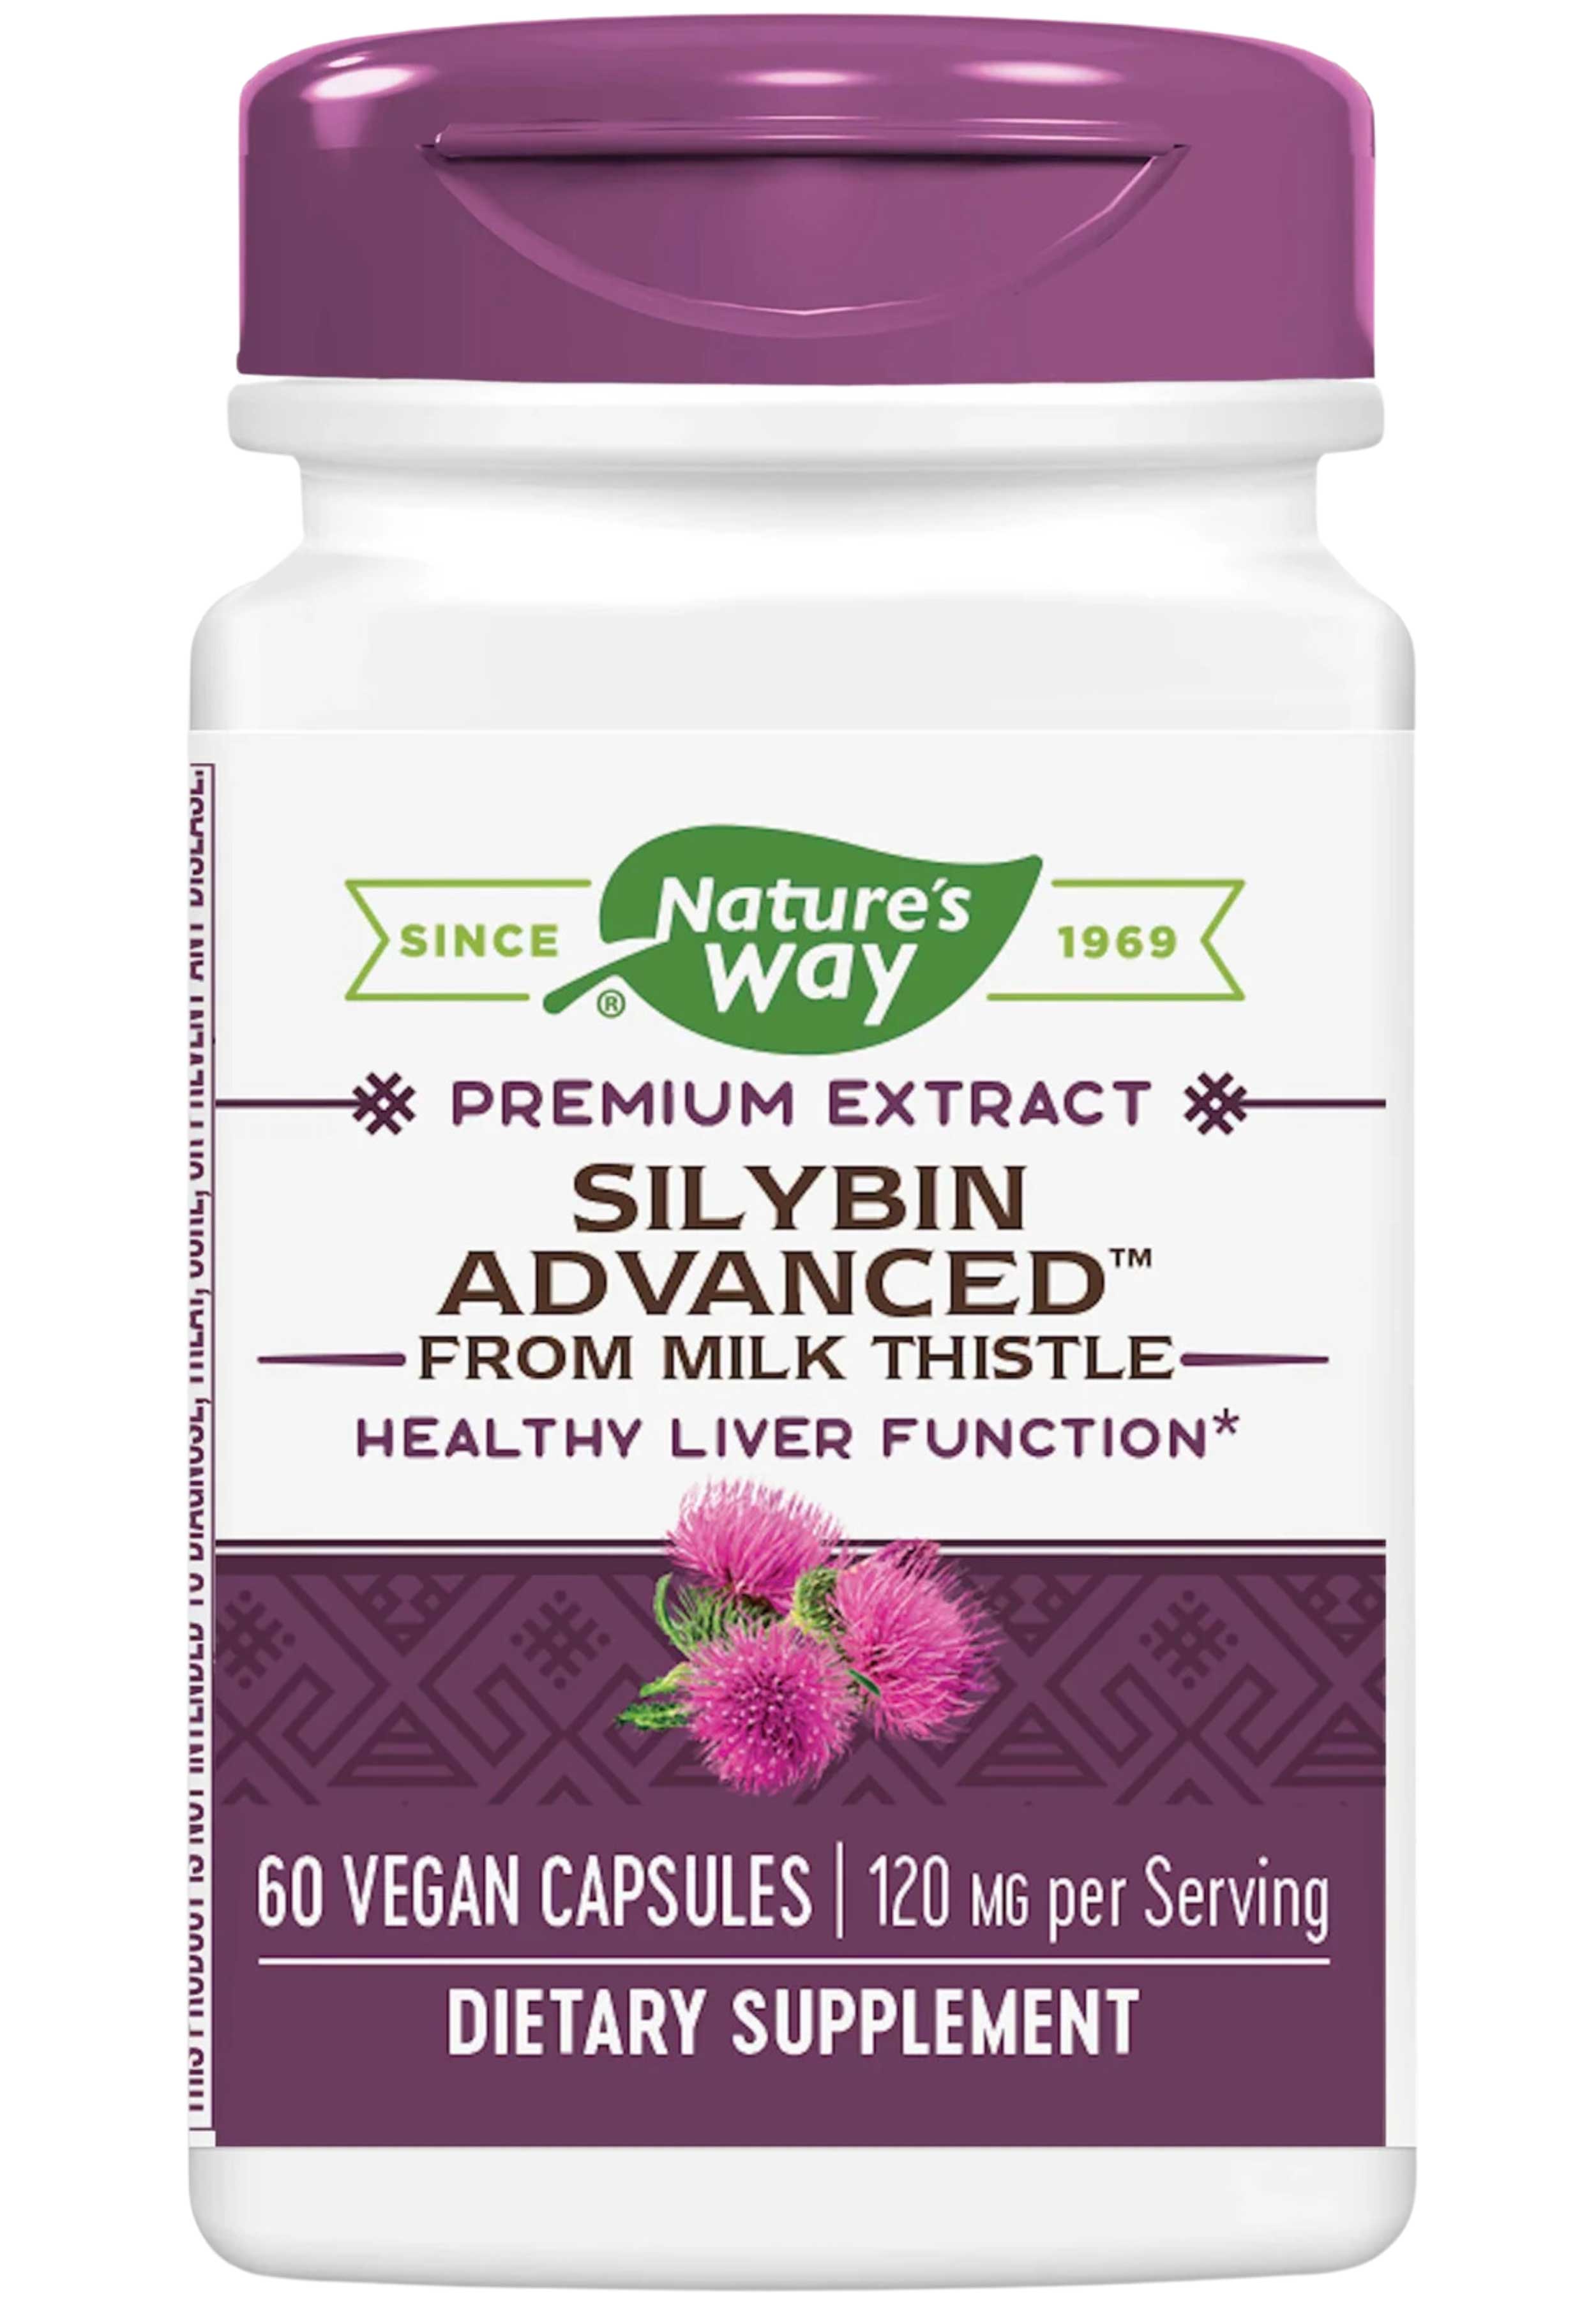 Nature's Way Silybin Advanced from Milk Thistle Premium Extract